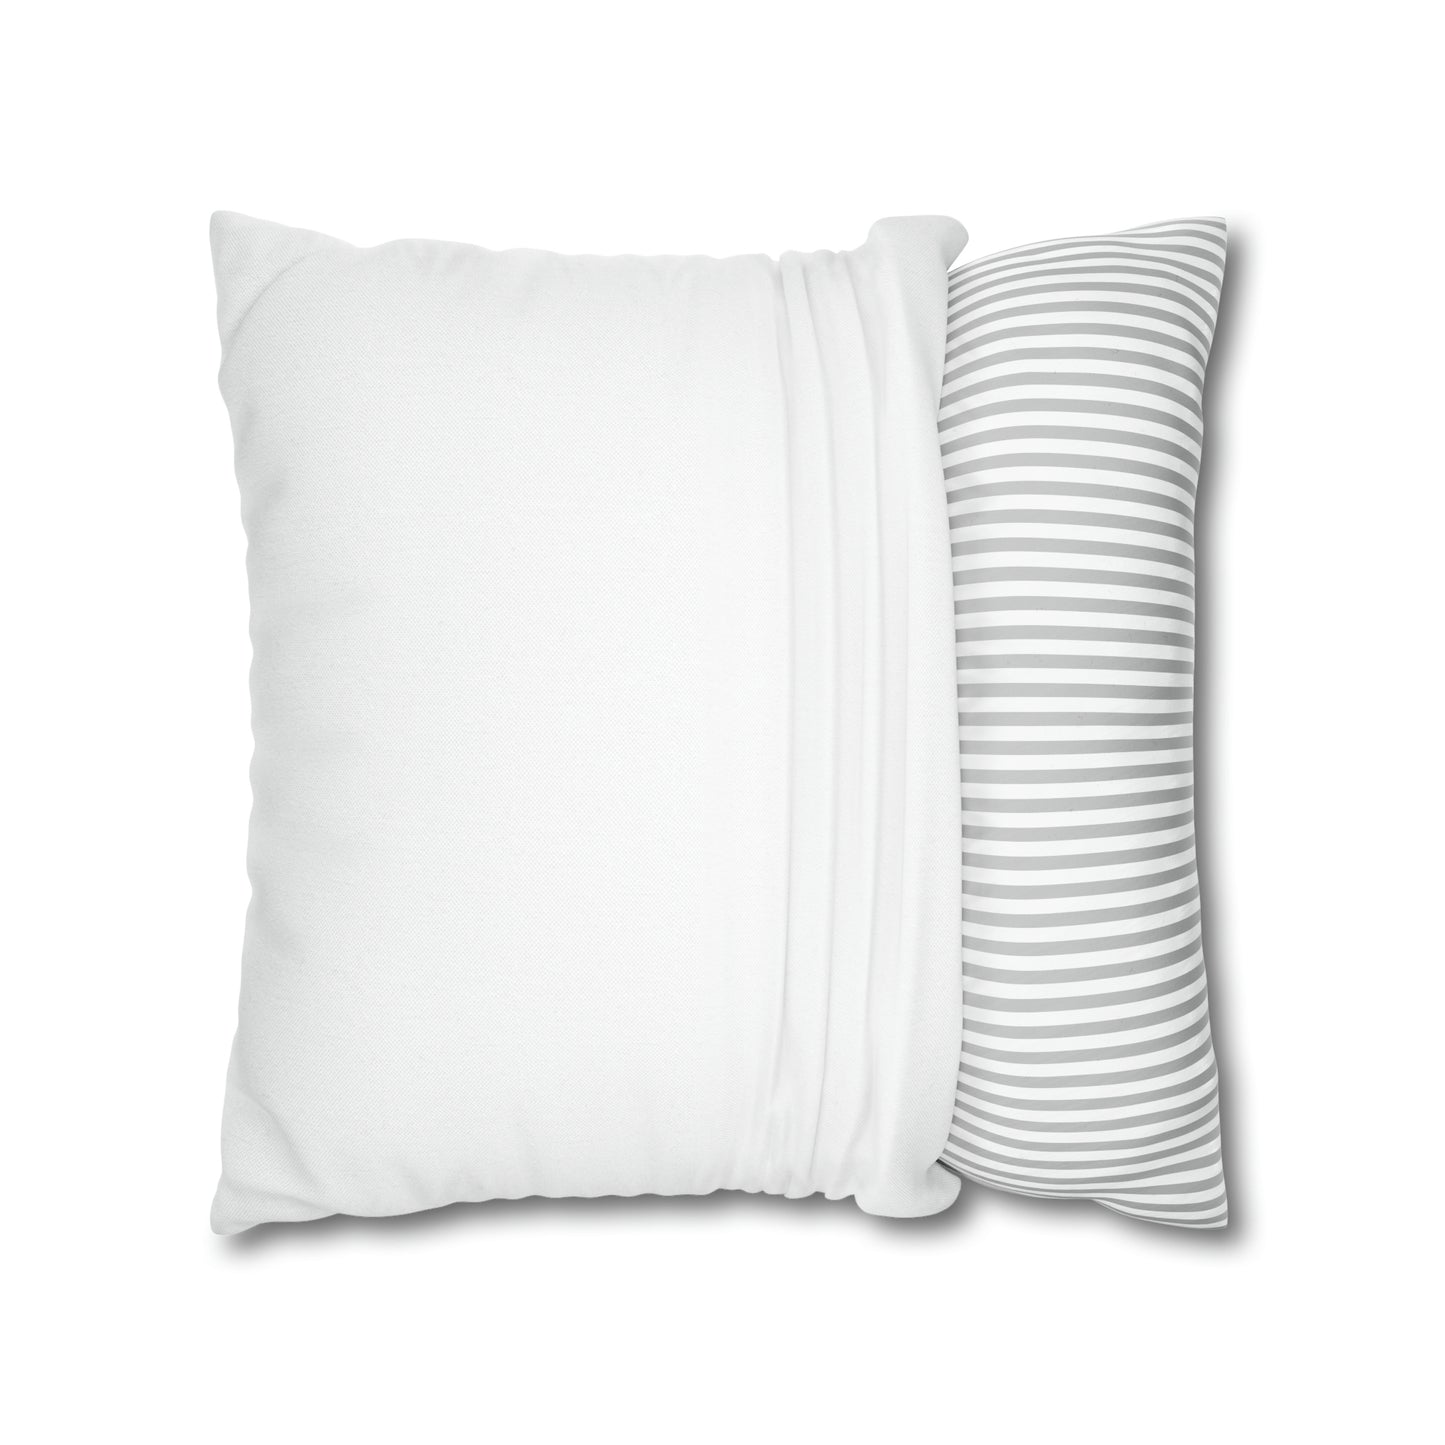 I Love Canada Spun Polyester Square Pillow Case